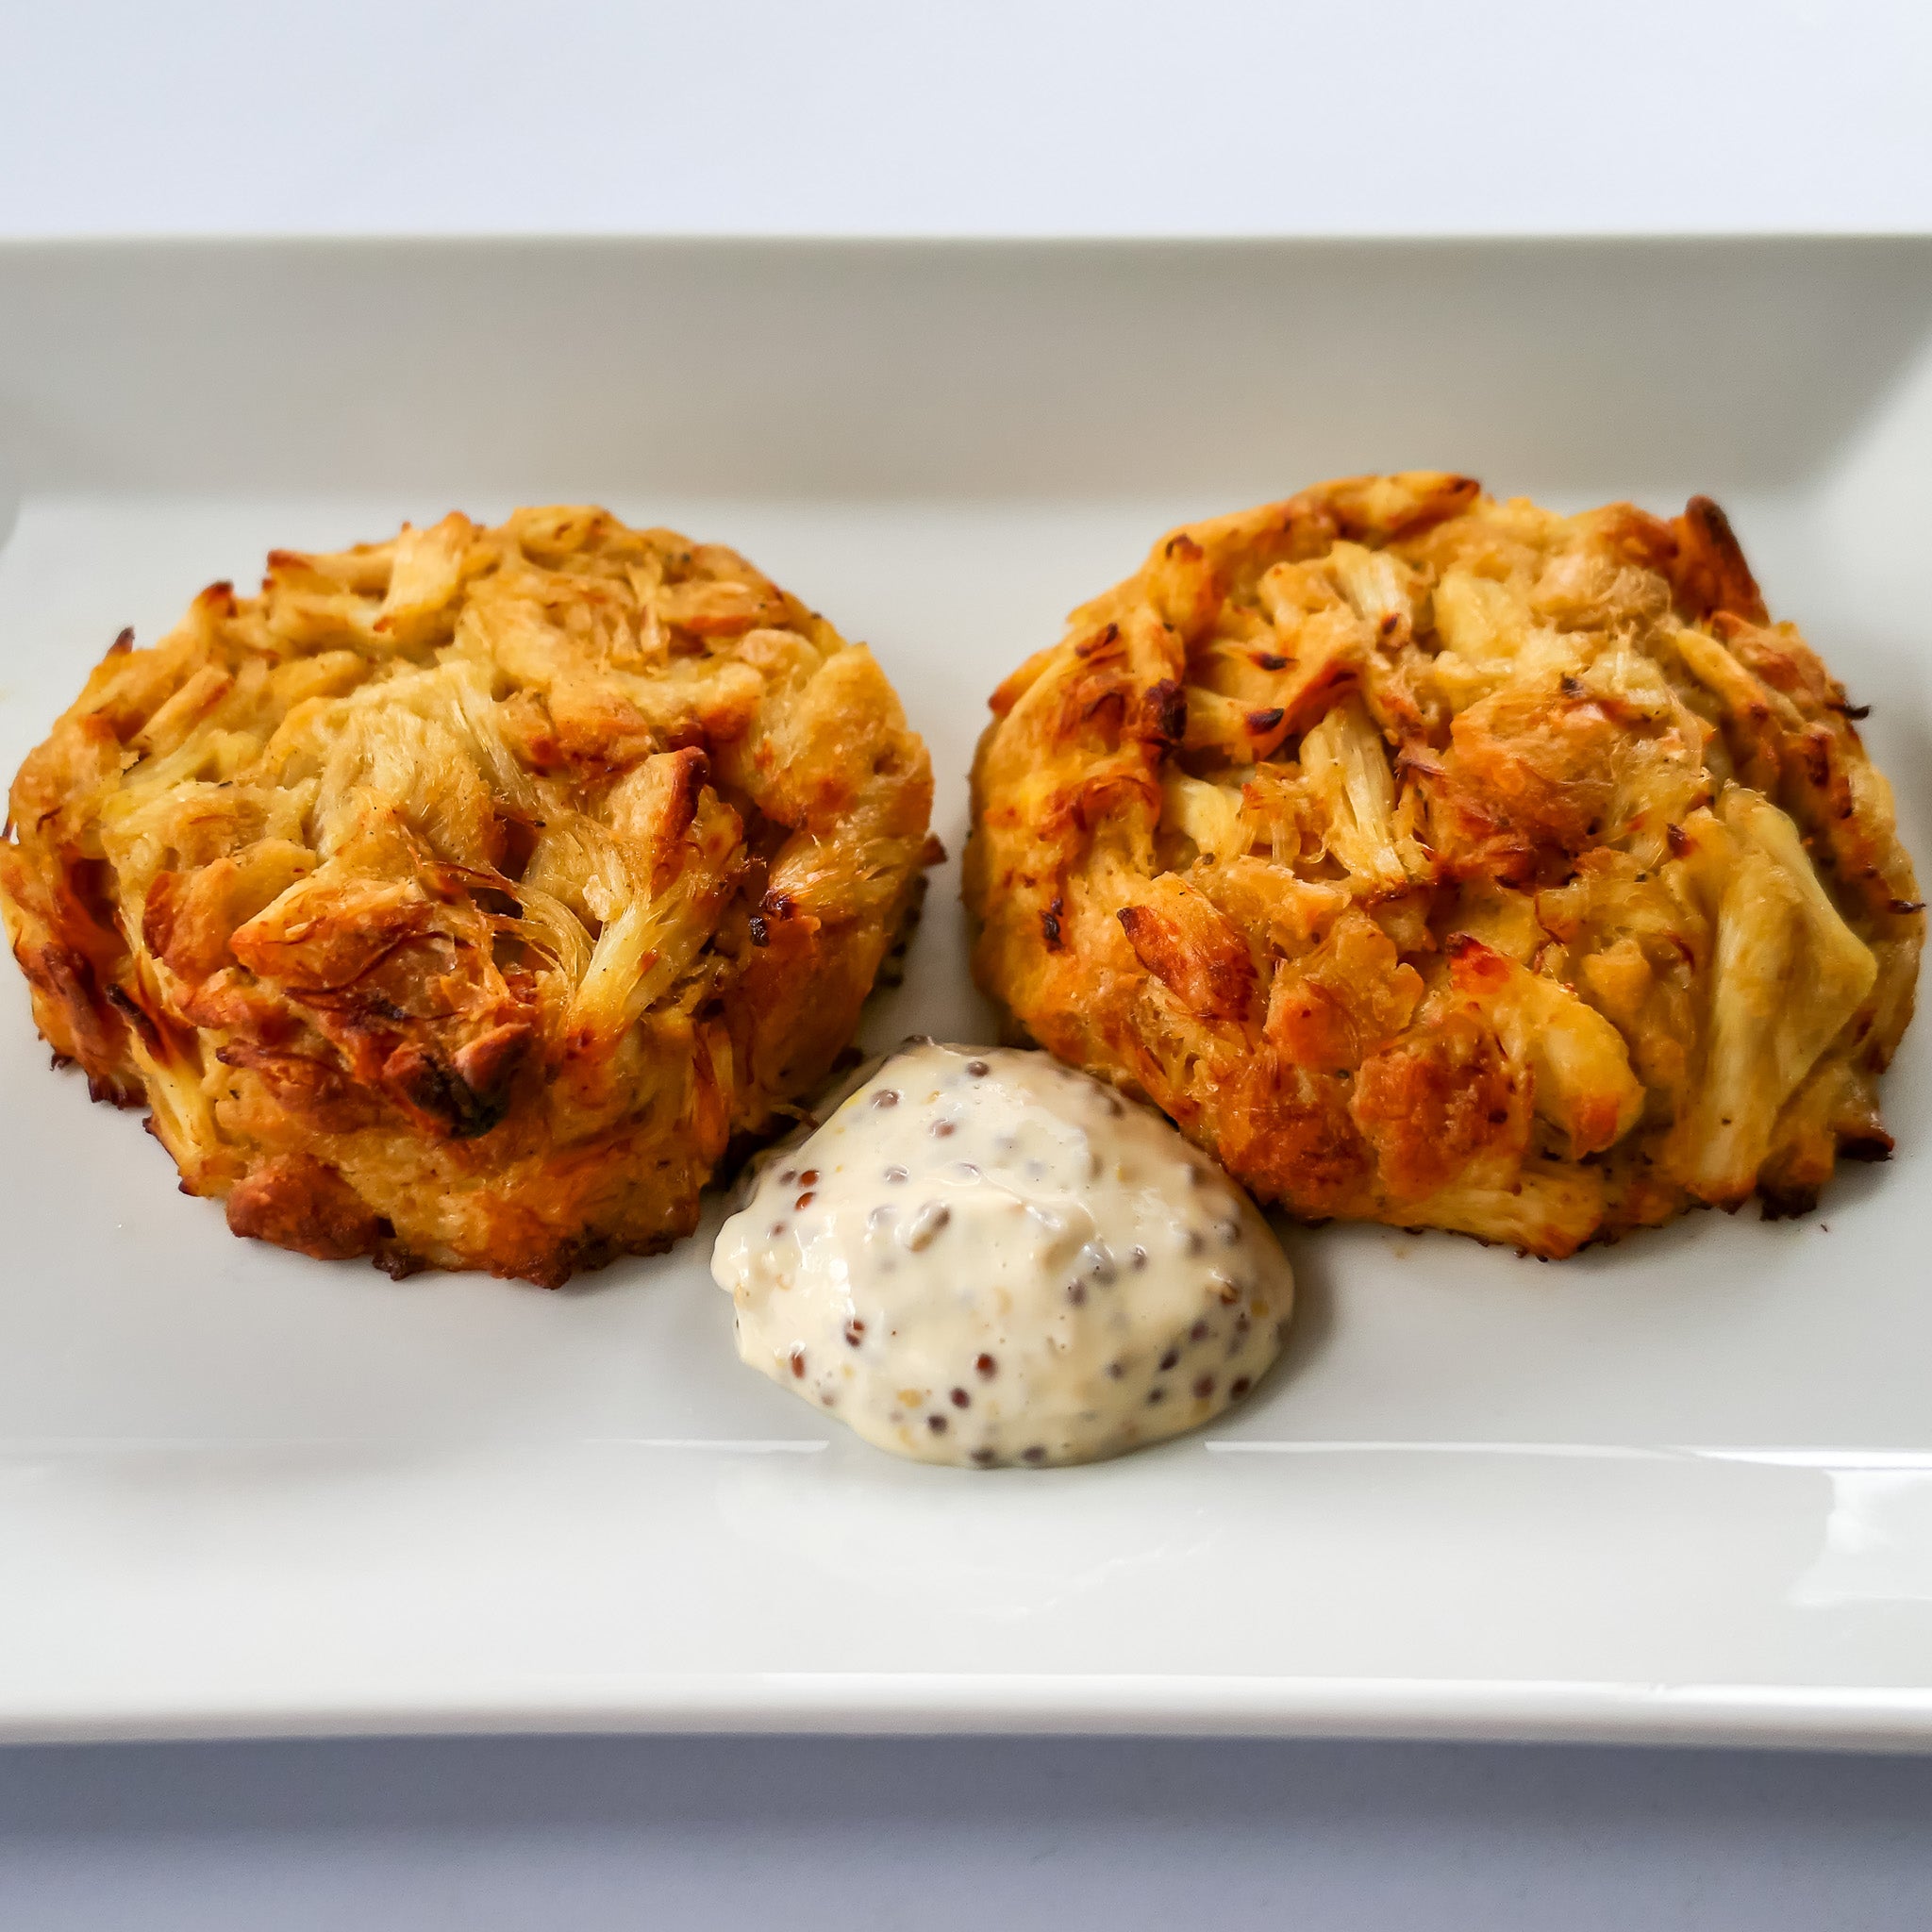 Best Maryland Crab Cake Recipe - With Jumbo Lump Crab!